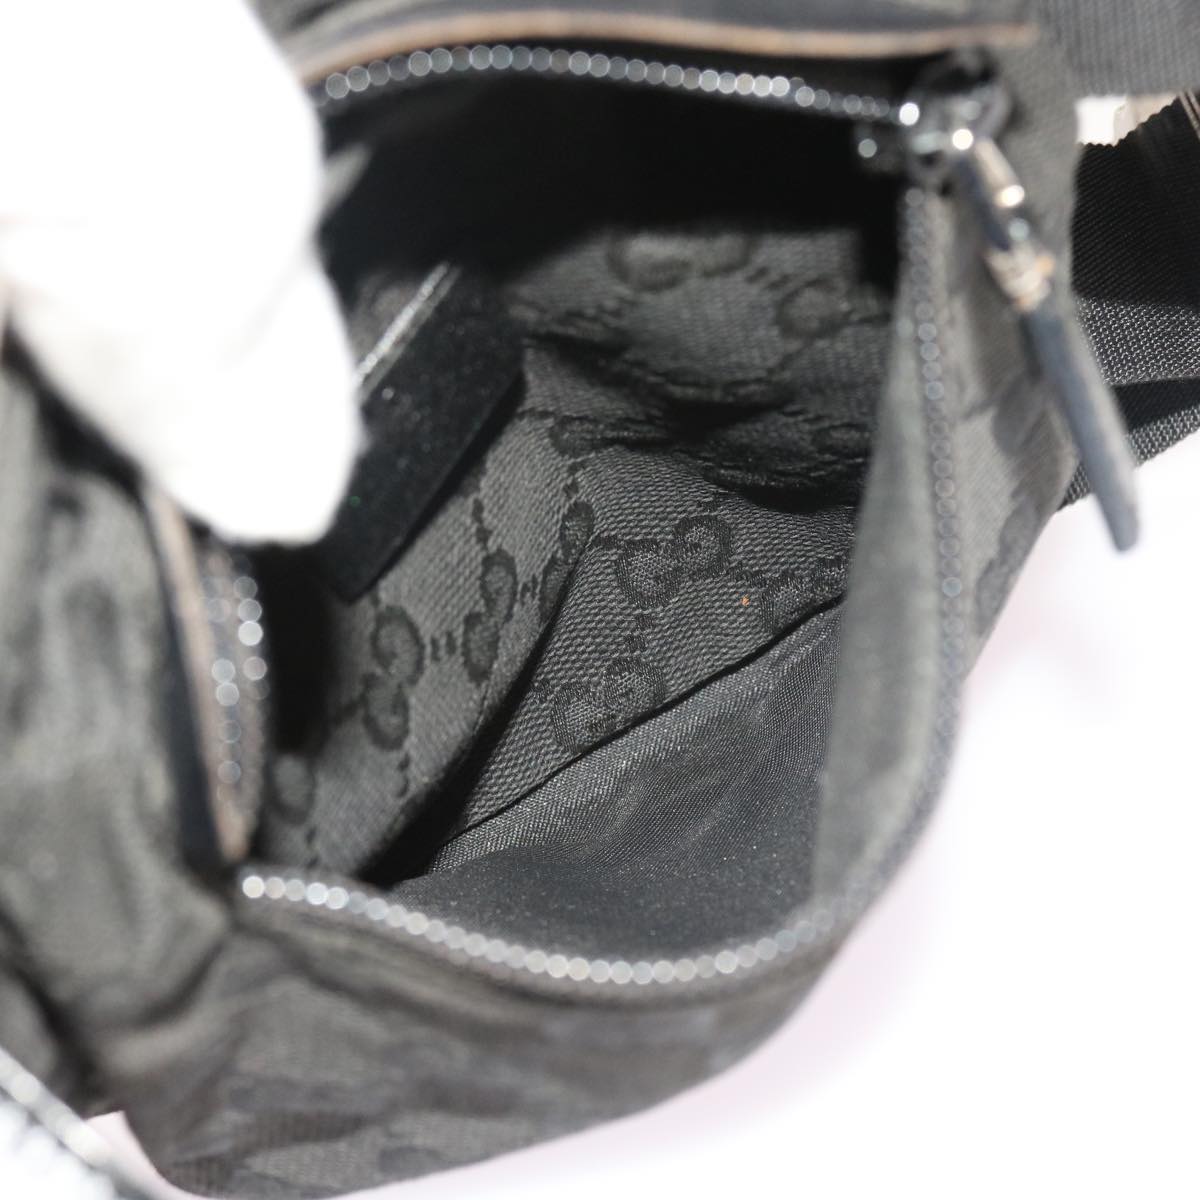 GUCCI GG Canvas Waist bag Leather Black 0181621 Auth 54701